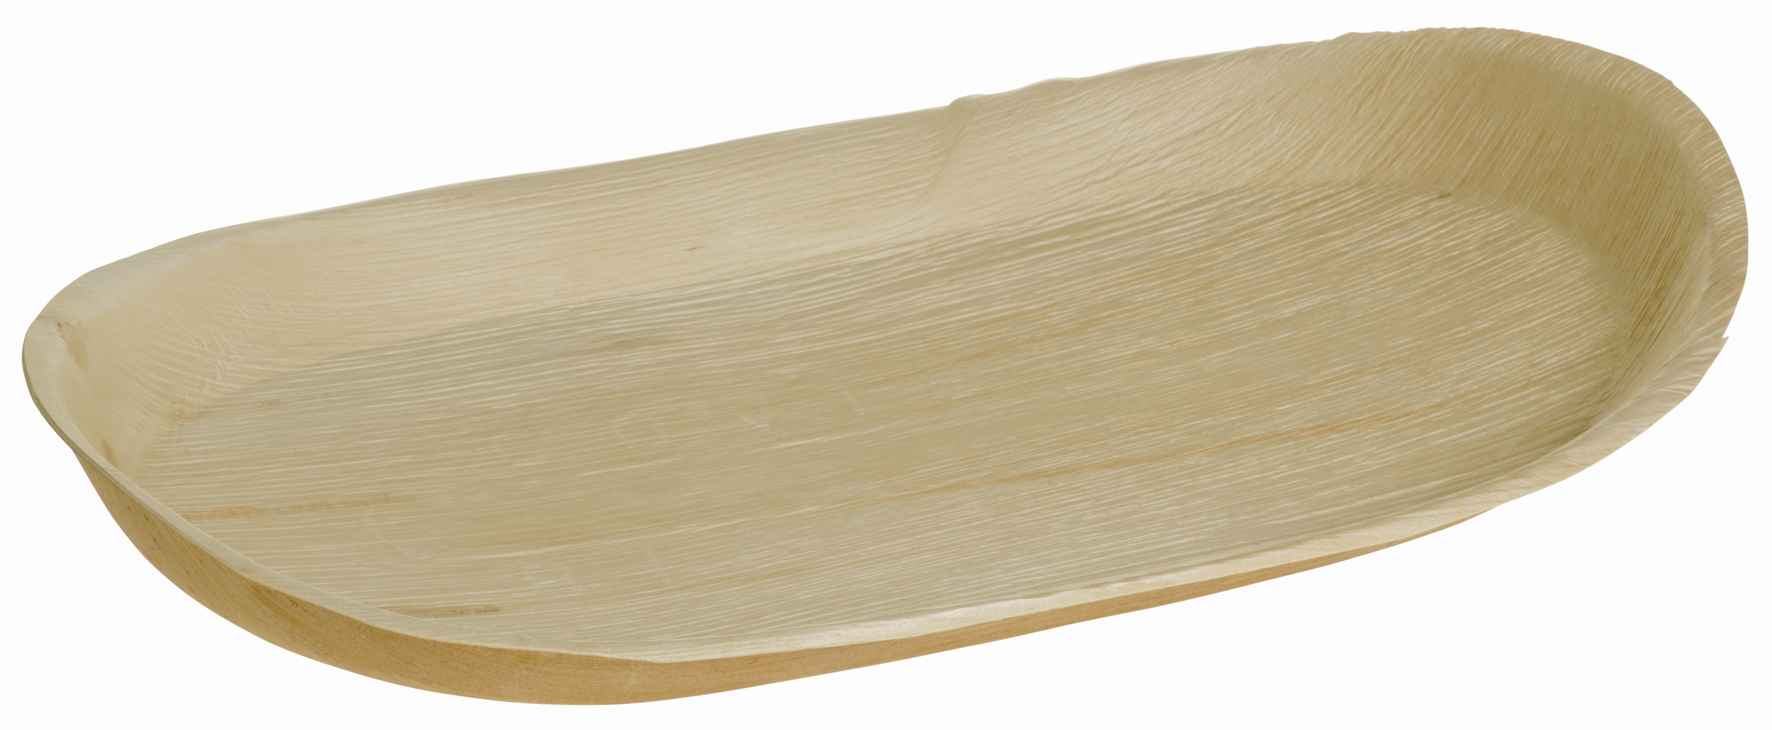 Pacovis Platte Palmblatt, 480x240x40mm, oval